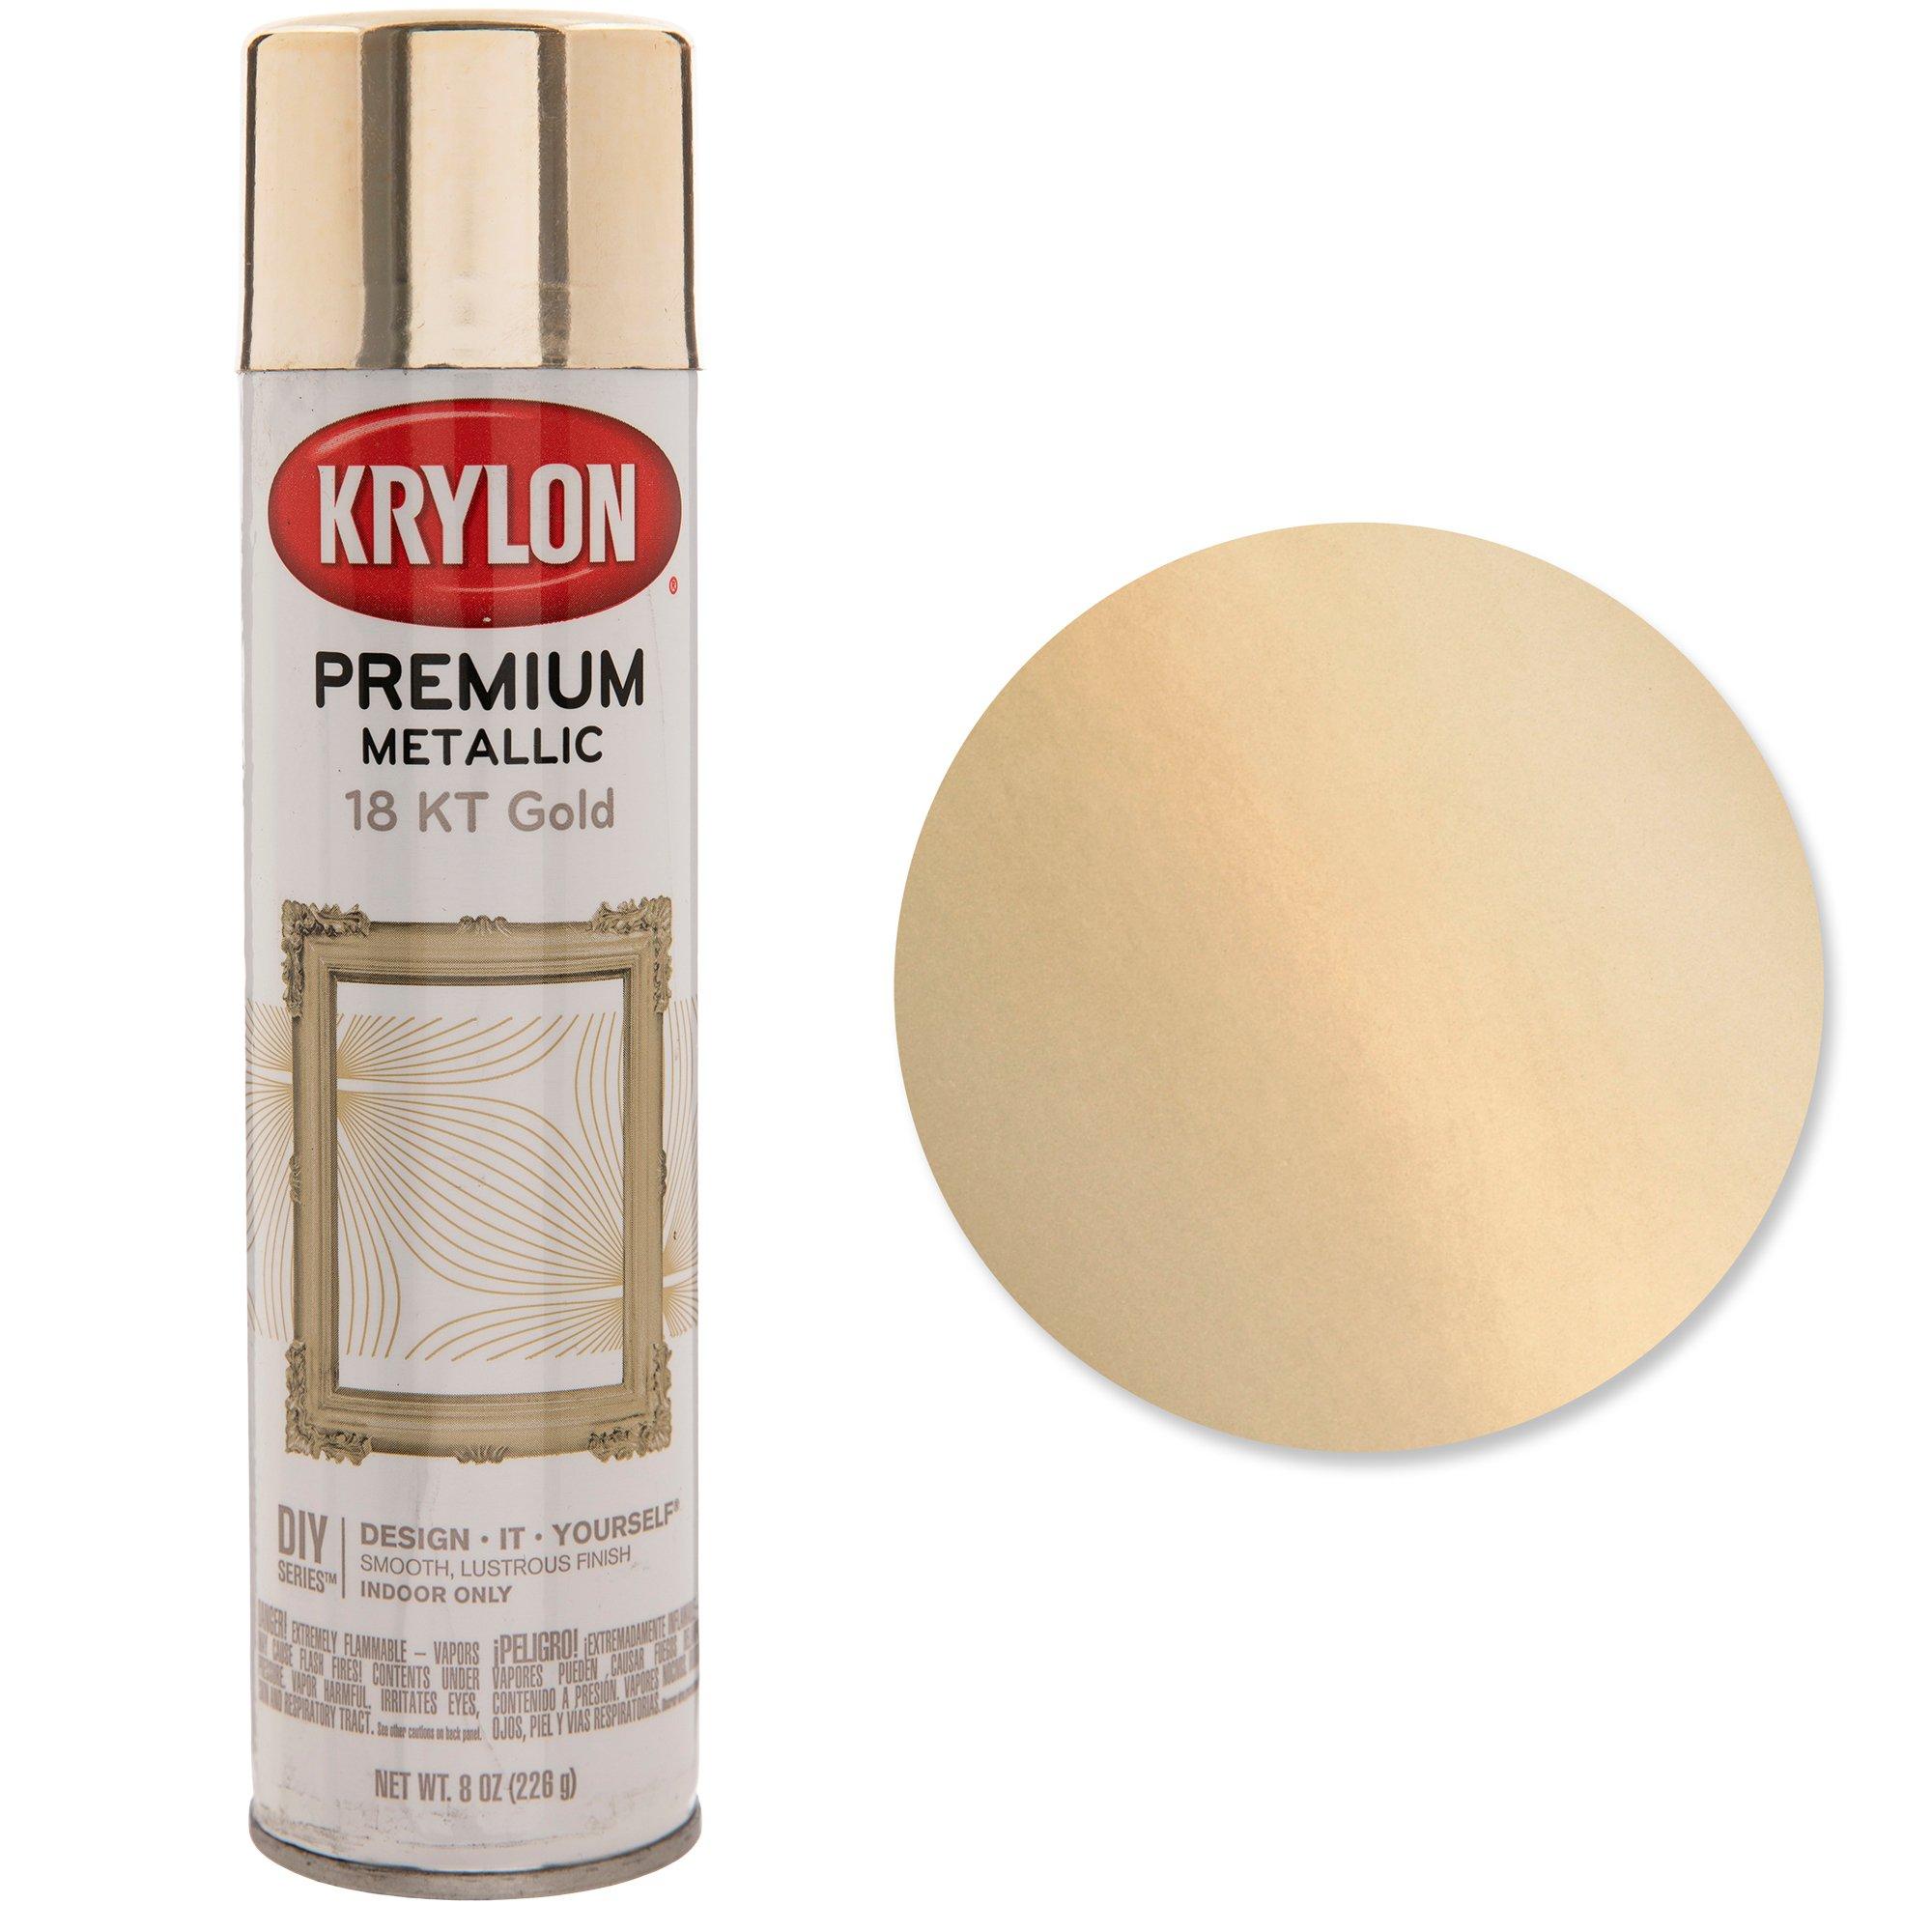 Krylon Metallic Gold Spray Paint for Metal Wood Ceramic Glass 18K